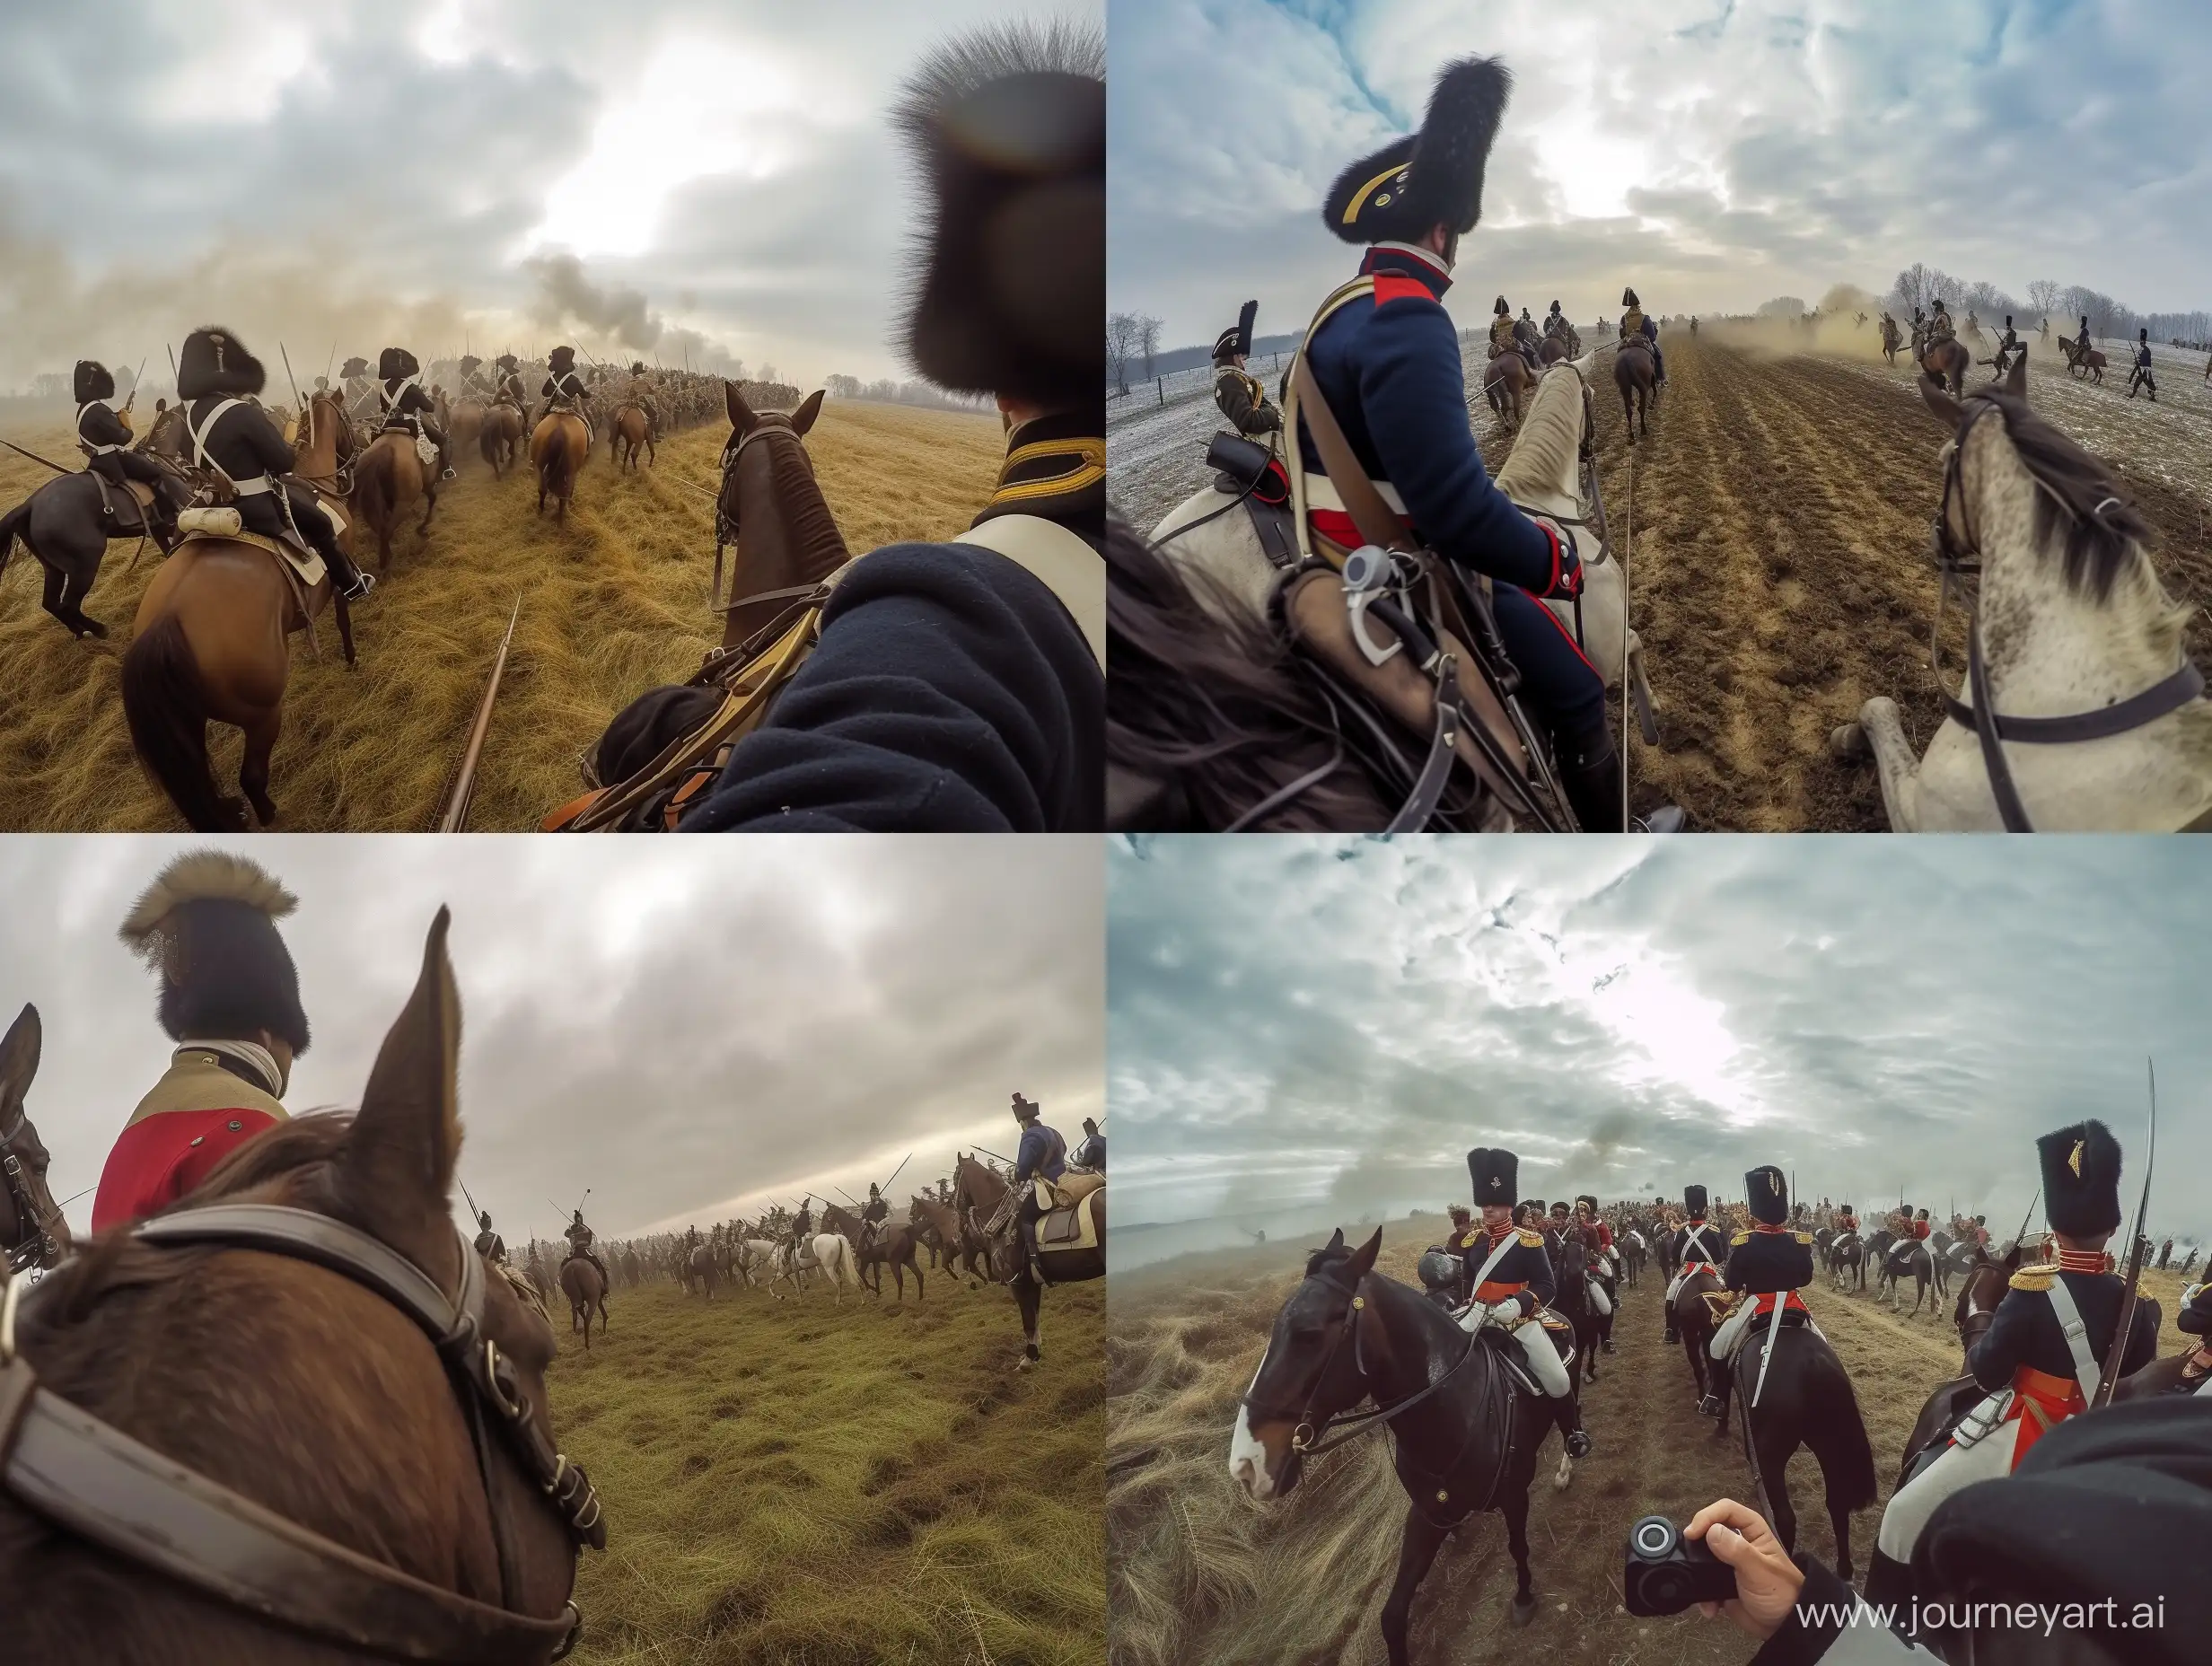 Intense-Battle-of-Austerlitz-POV-Captured-with-GoPro-Historical-War-Reenactment